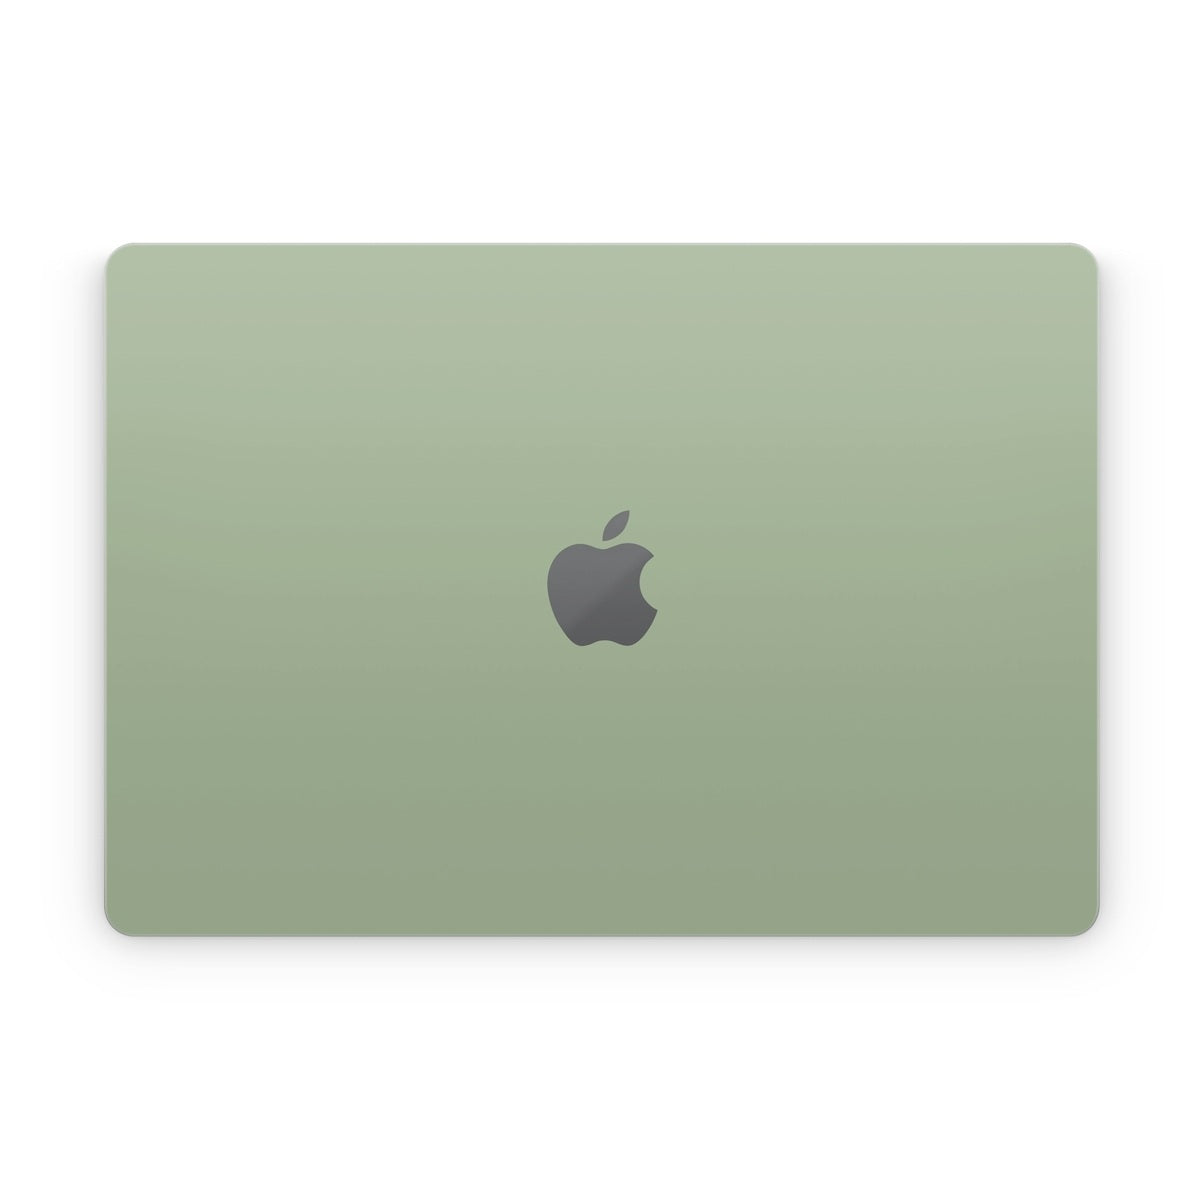 Solid State Sage - Apple MacBook Skin